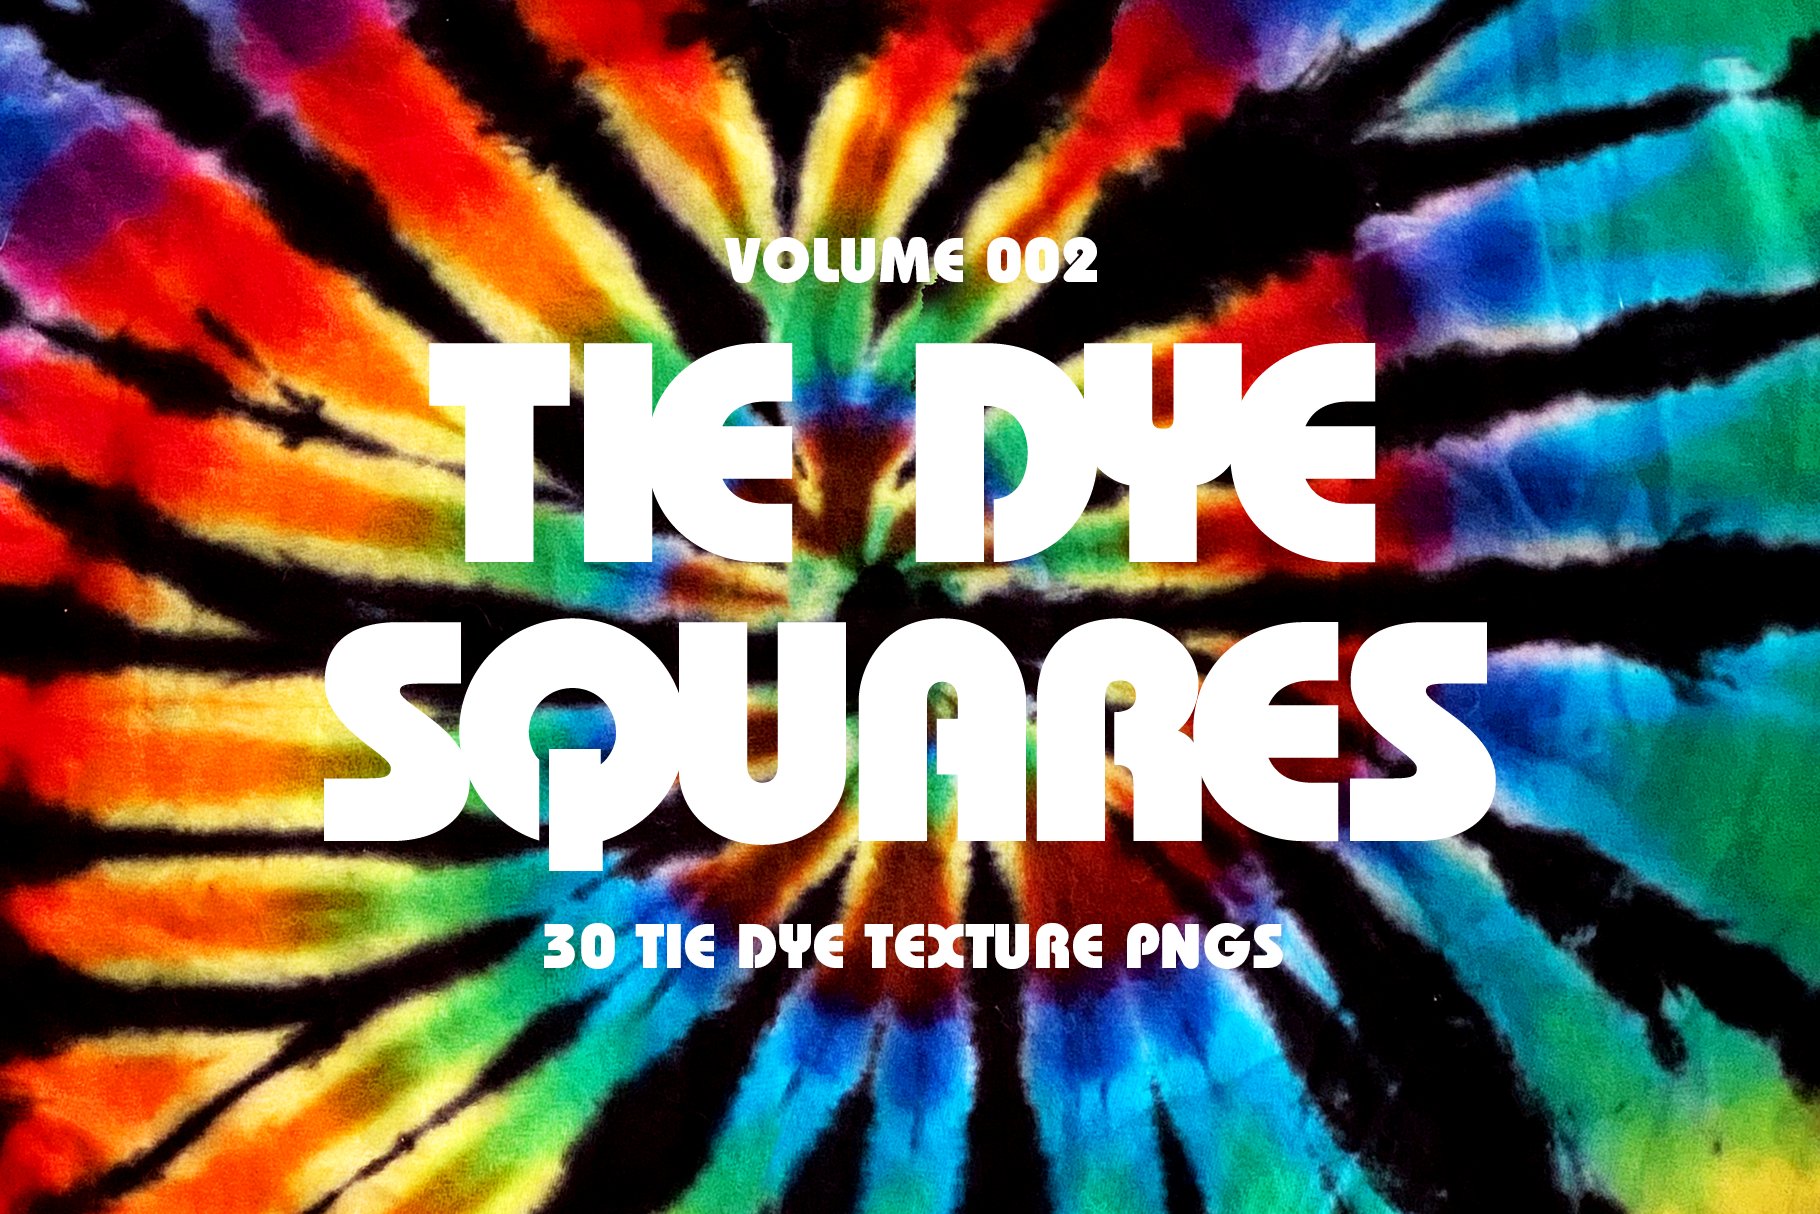 Tie Dye Squares Vol 002 cover image.